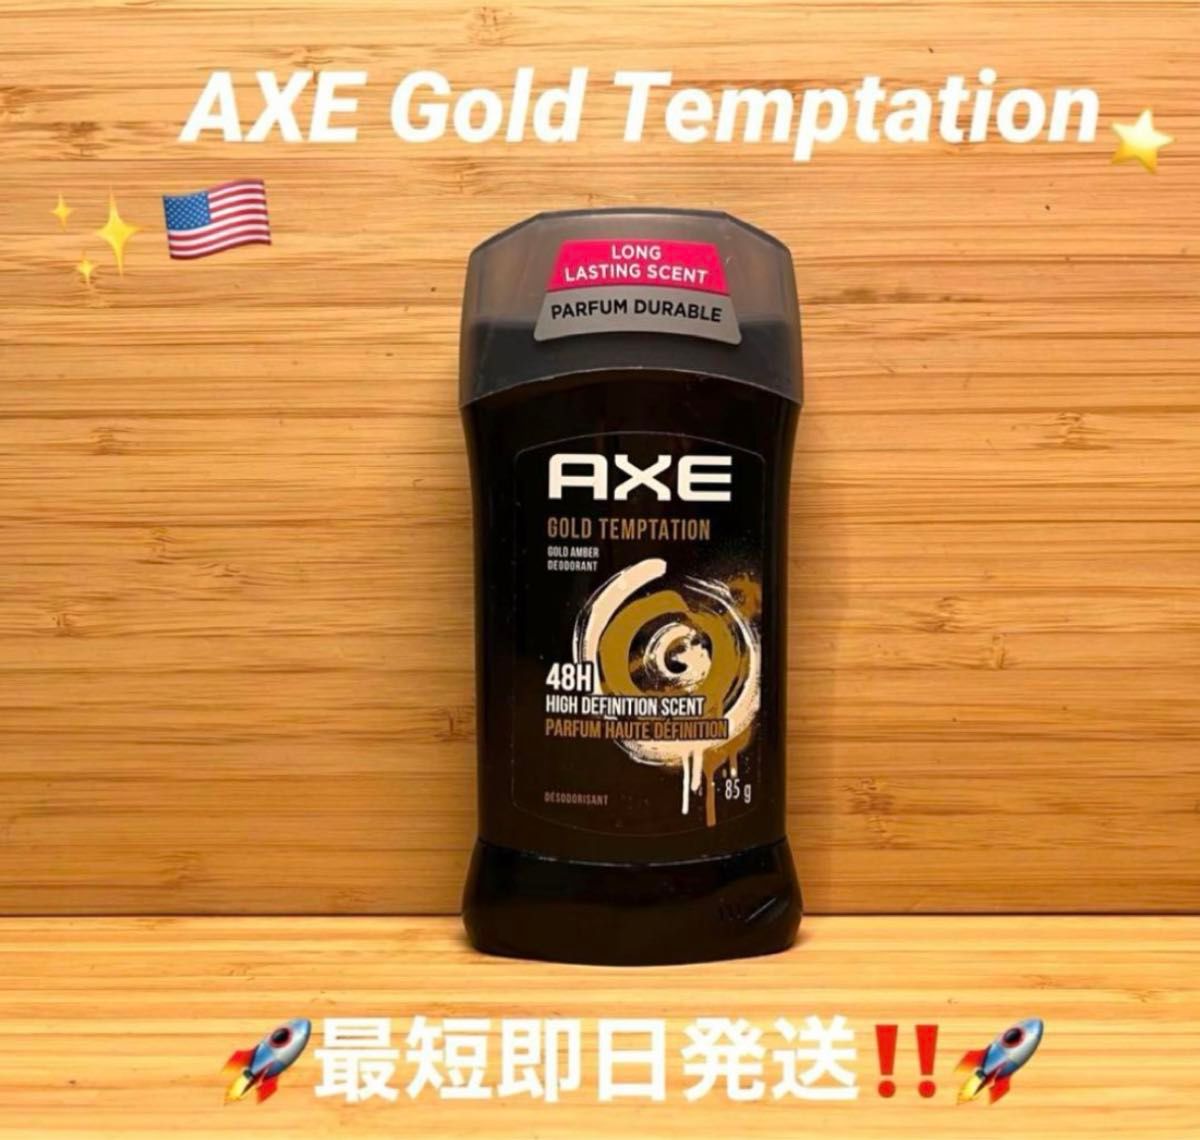 ☆ AXE Gold Temptation AluminumFree アックス　ゴールドテンプテーションアルミニウムフリー☆